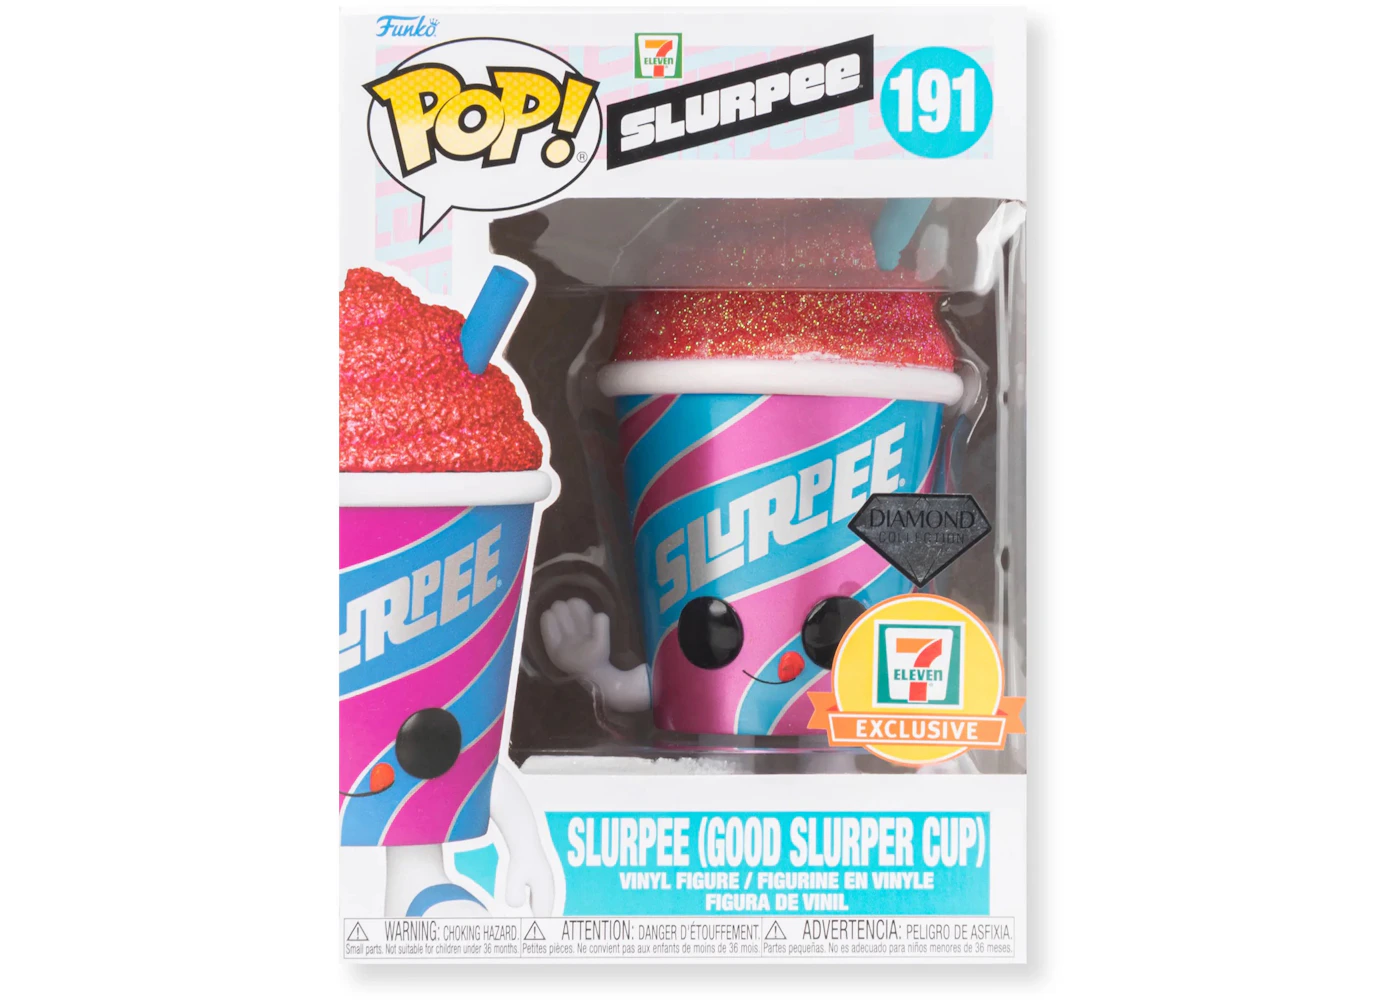 Funko Slurpee (Good Slurper Cup) Diamond Collection 7-Eleven Exclusive - JP